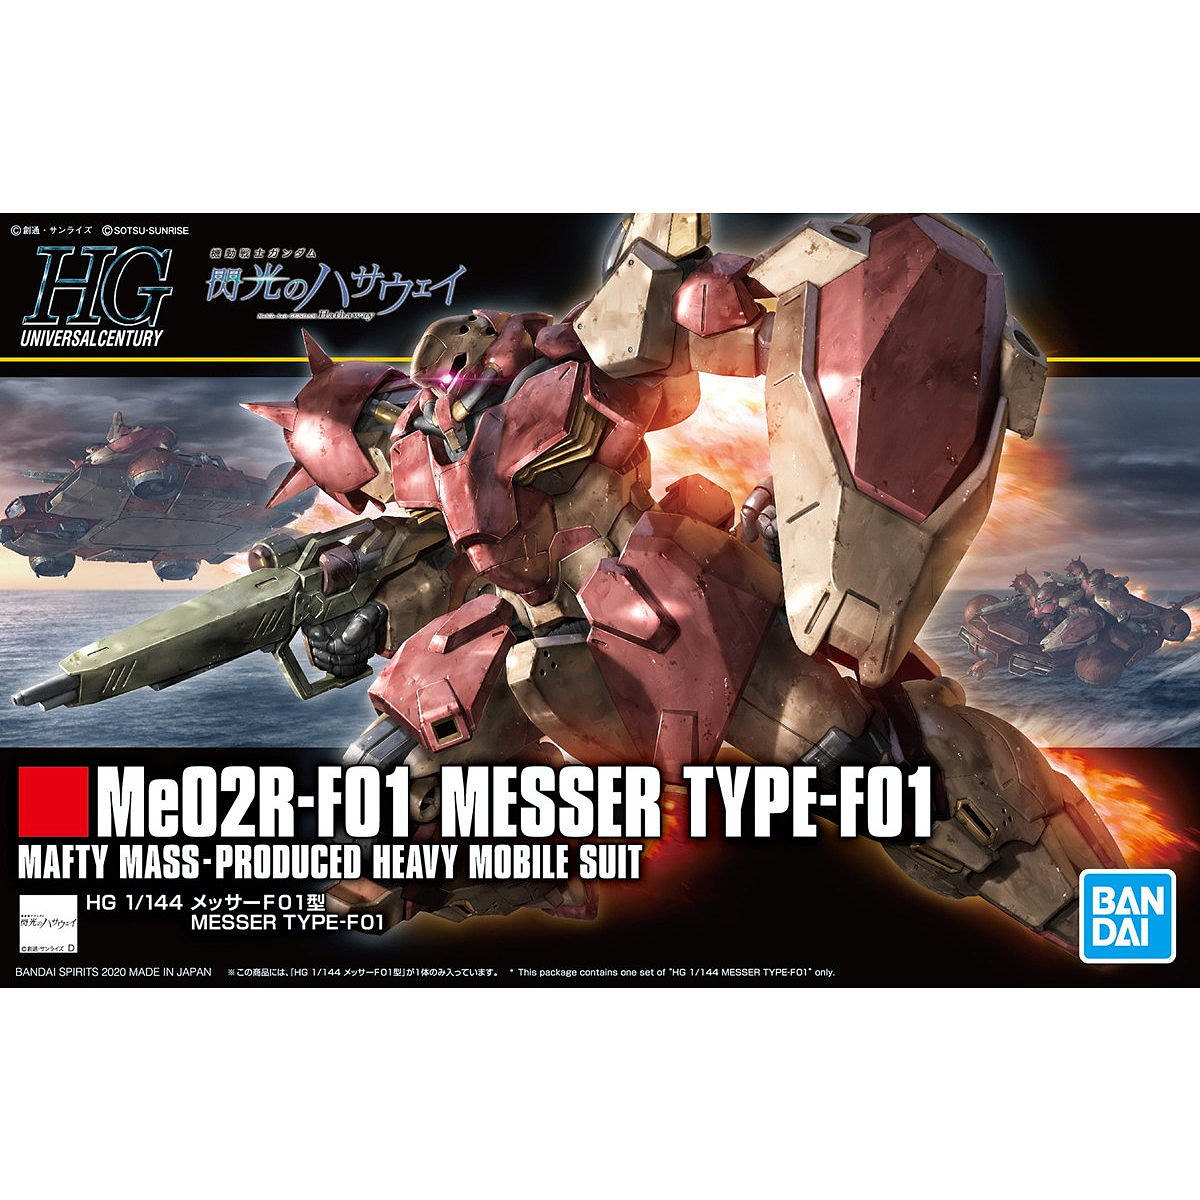 Gundam High Grade Universal Century #233: Me02R-F01 MESSER TYPE-F01 